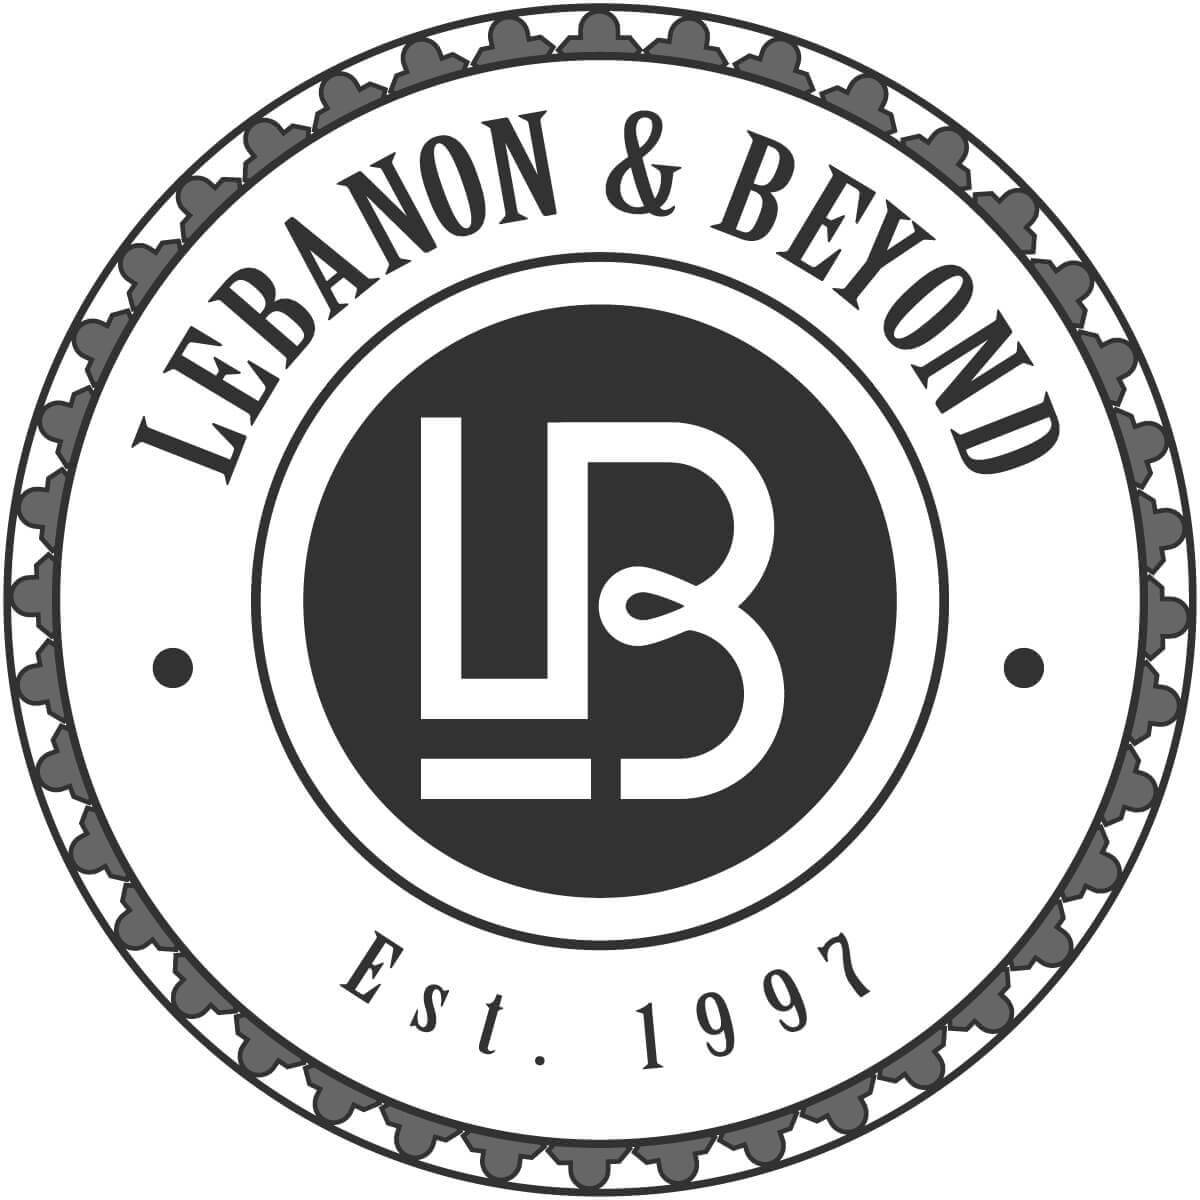 Lebanon and  Beyond Restaurant